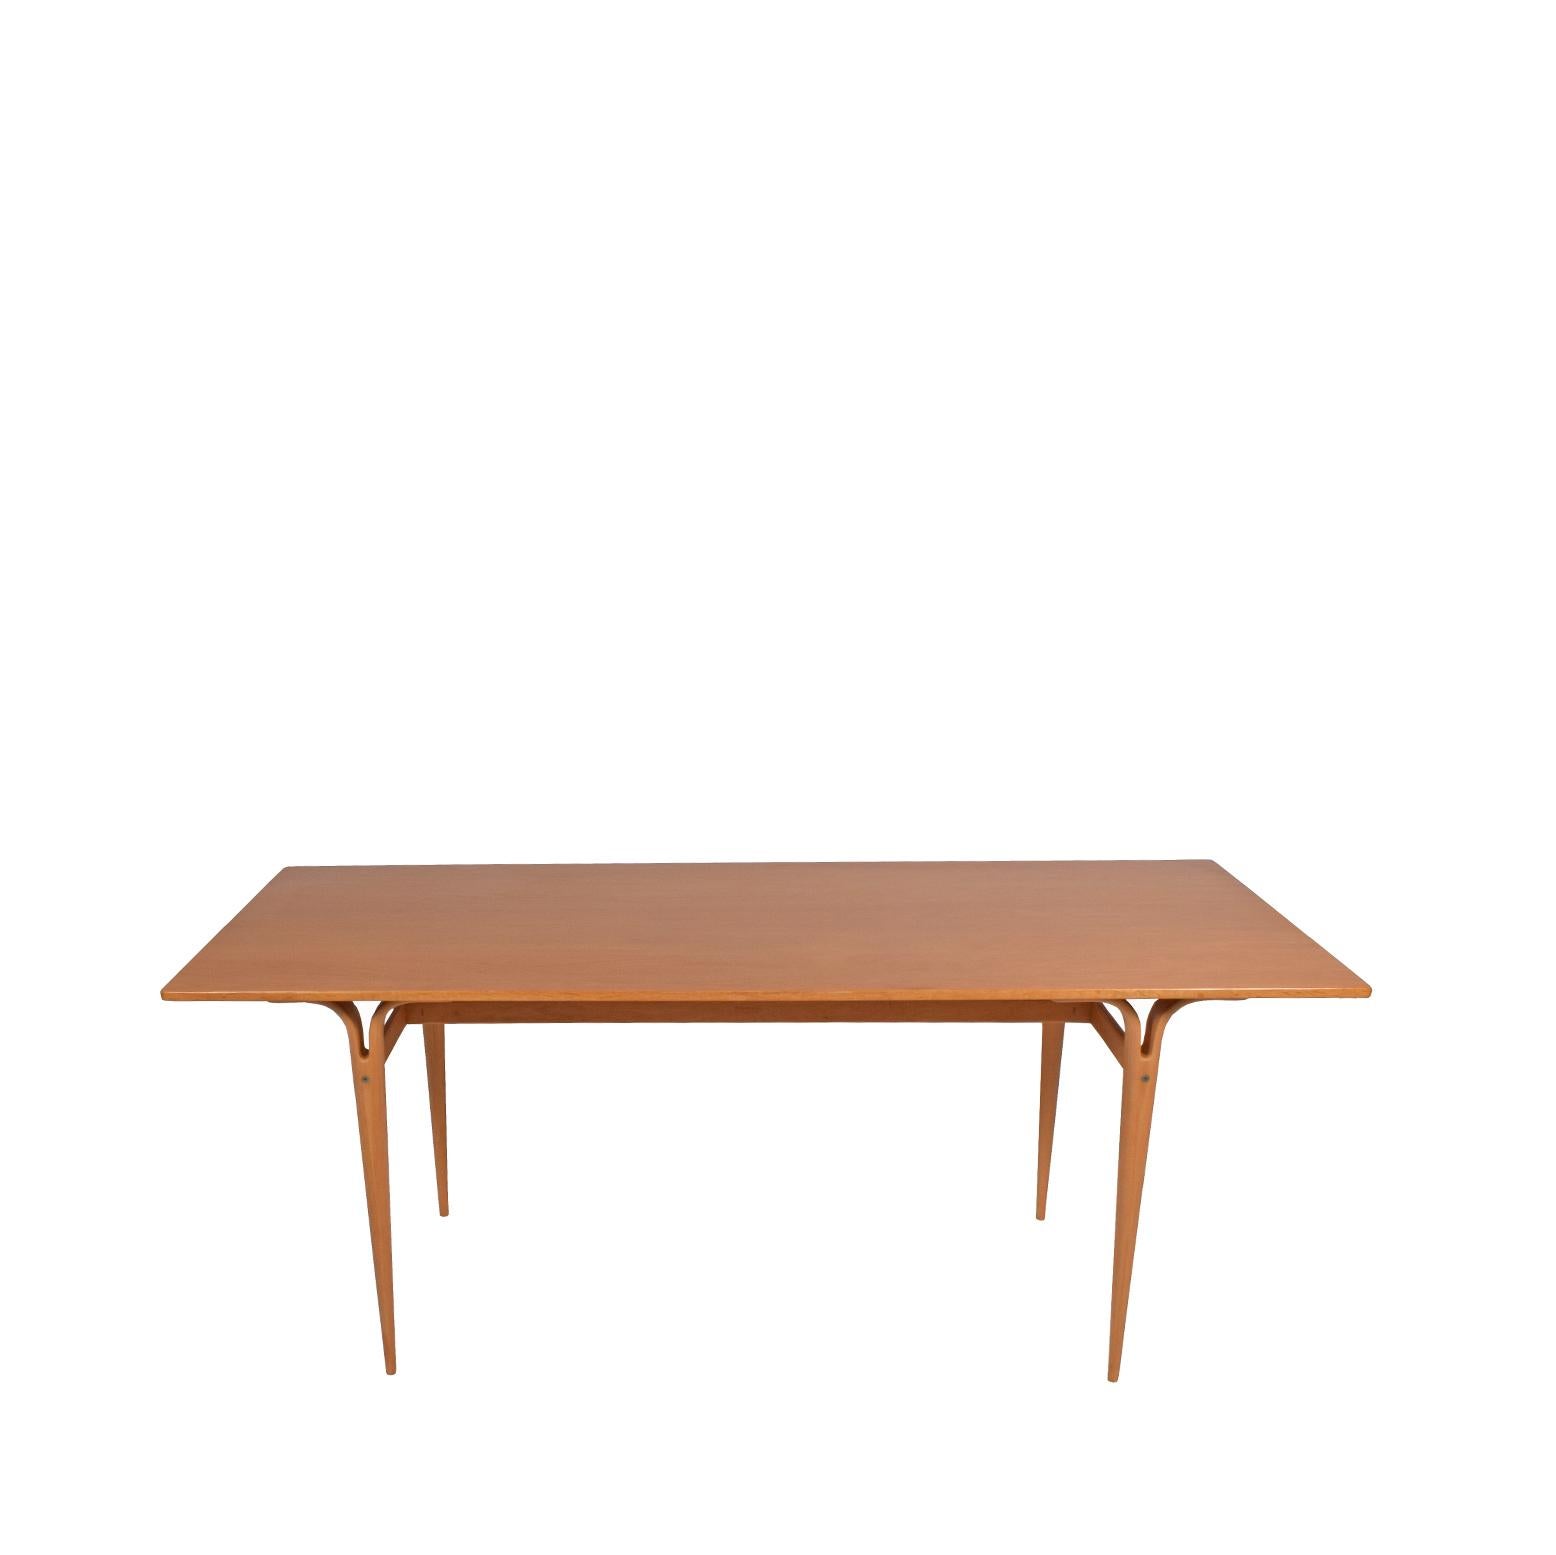 Swedish Bruno Mathsson Table / Desk made by Karl Mathsson, 1966